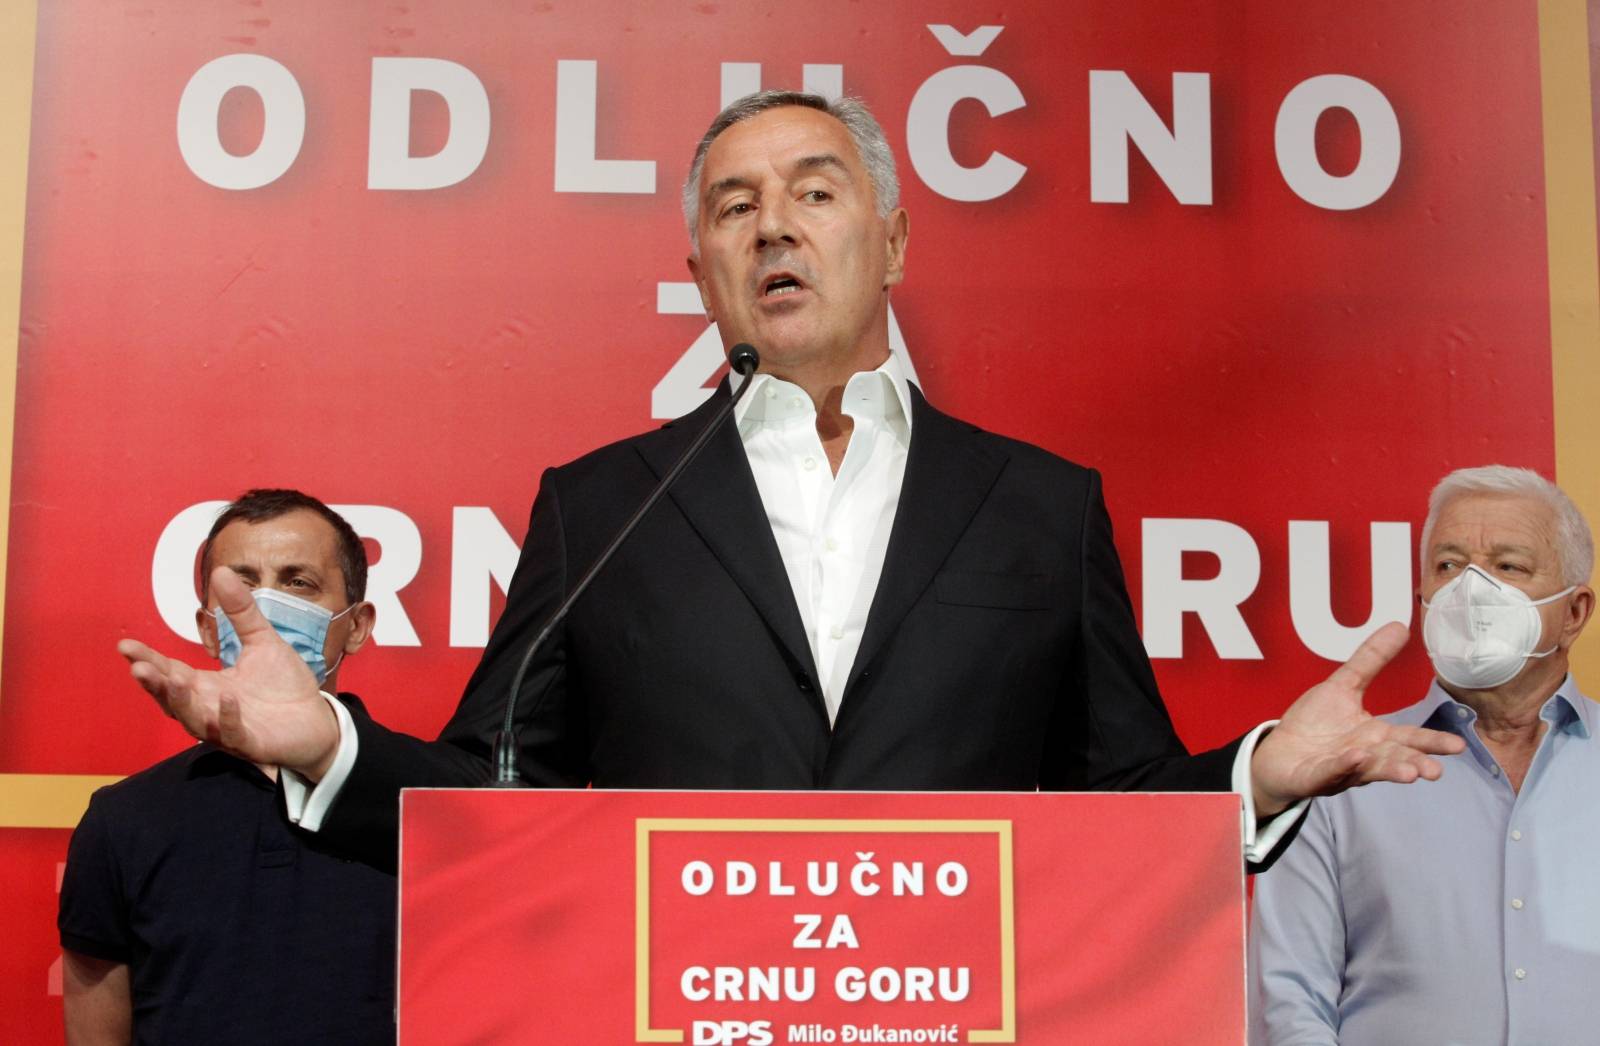 General election in Podgorica, Montenegro